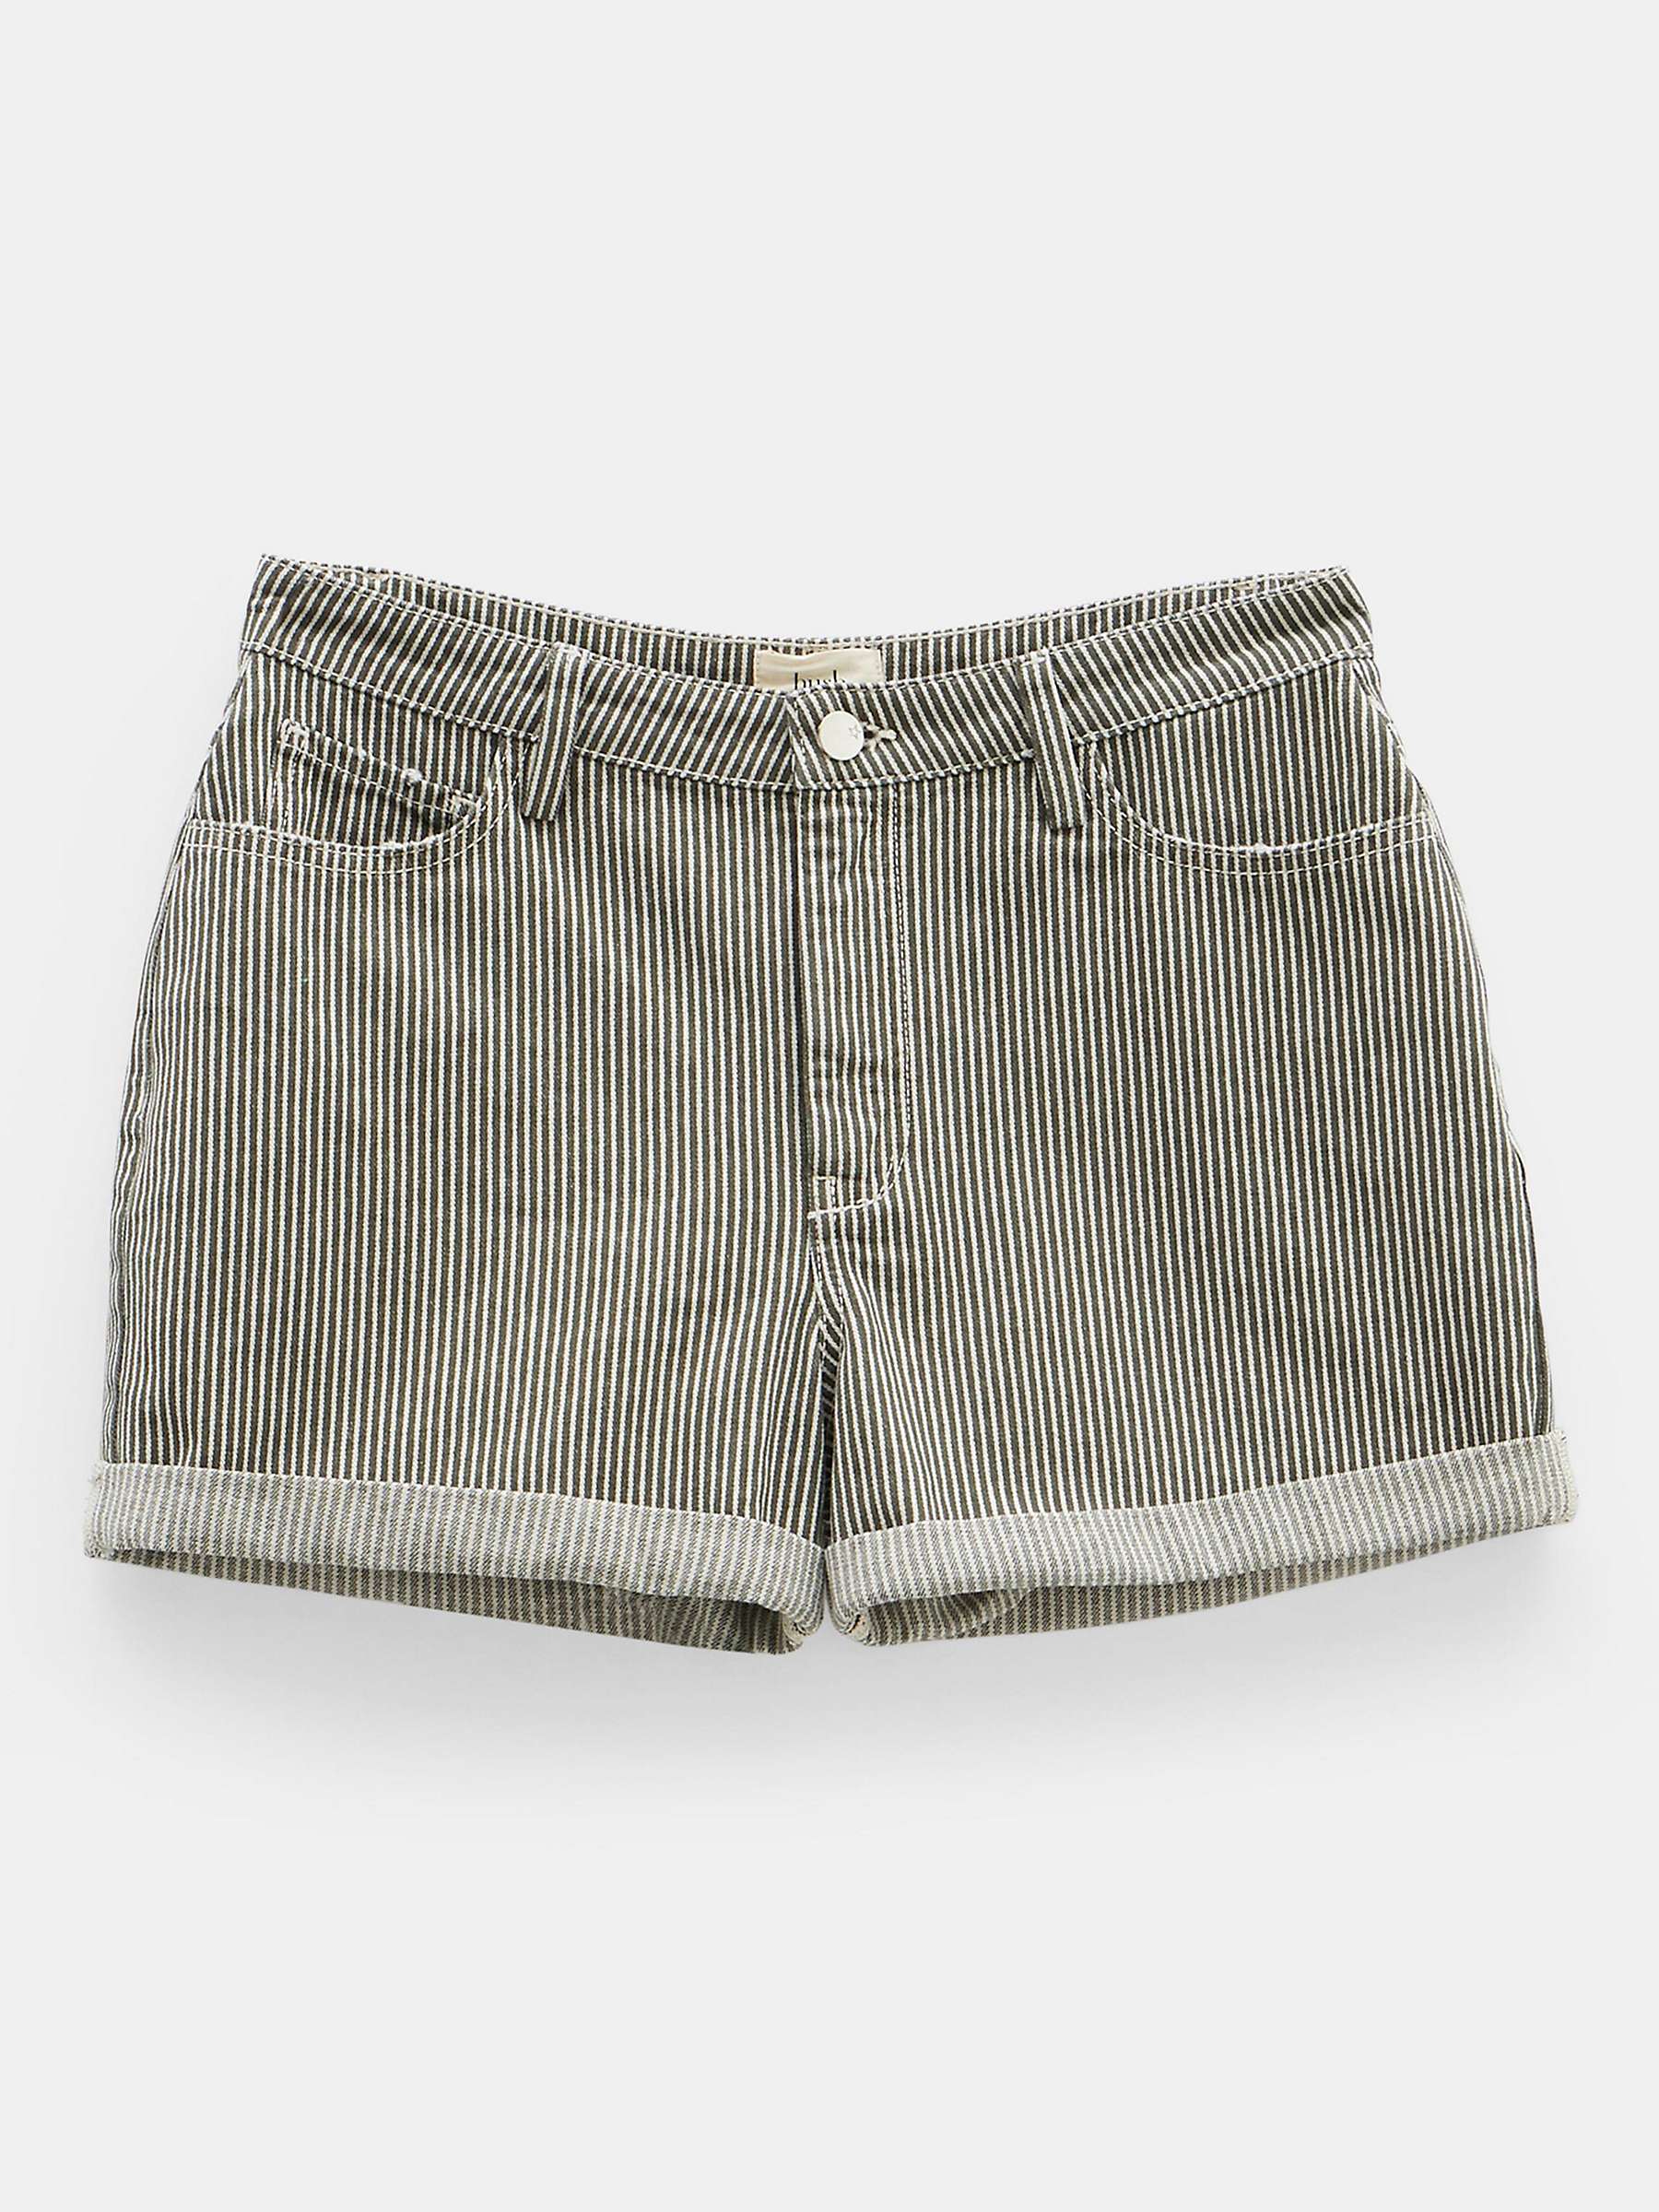 Buy HUSH Amalia Striped Cotton Shorts, Dark Olive Online at johnlewis.com